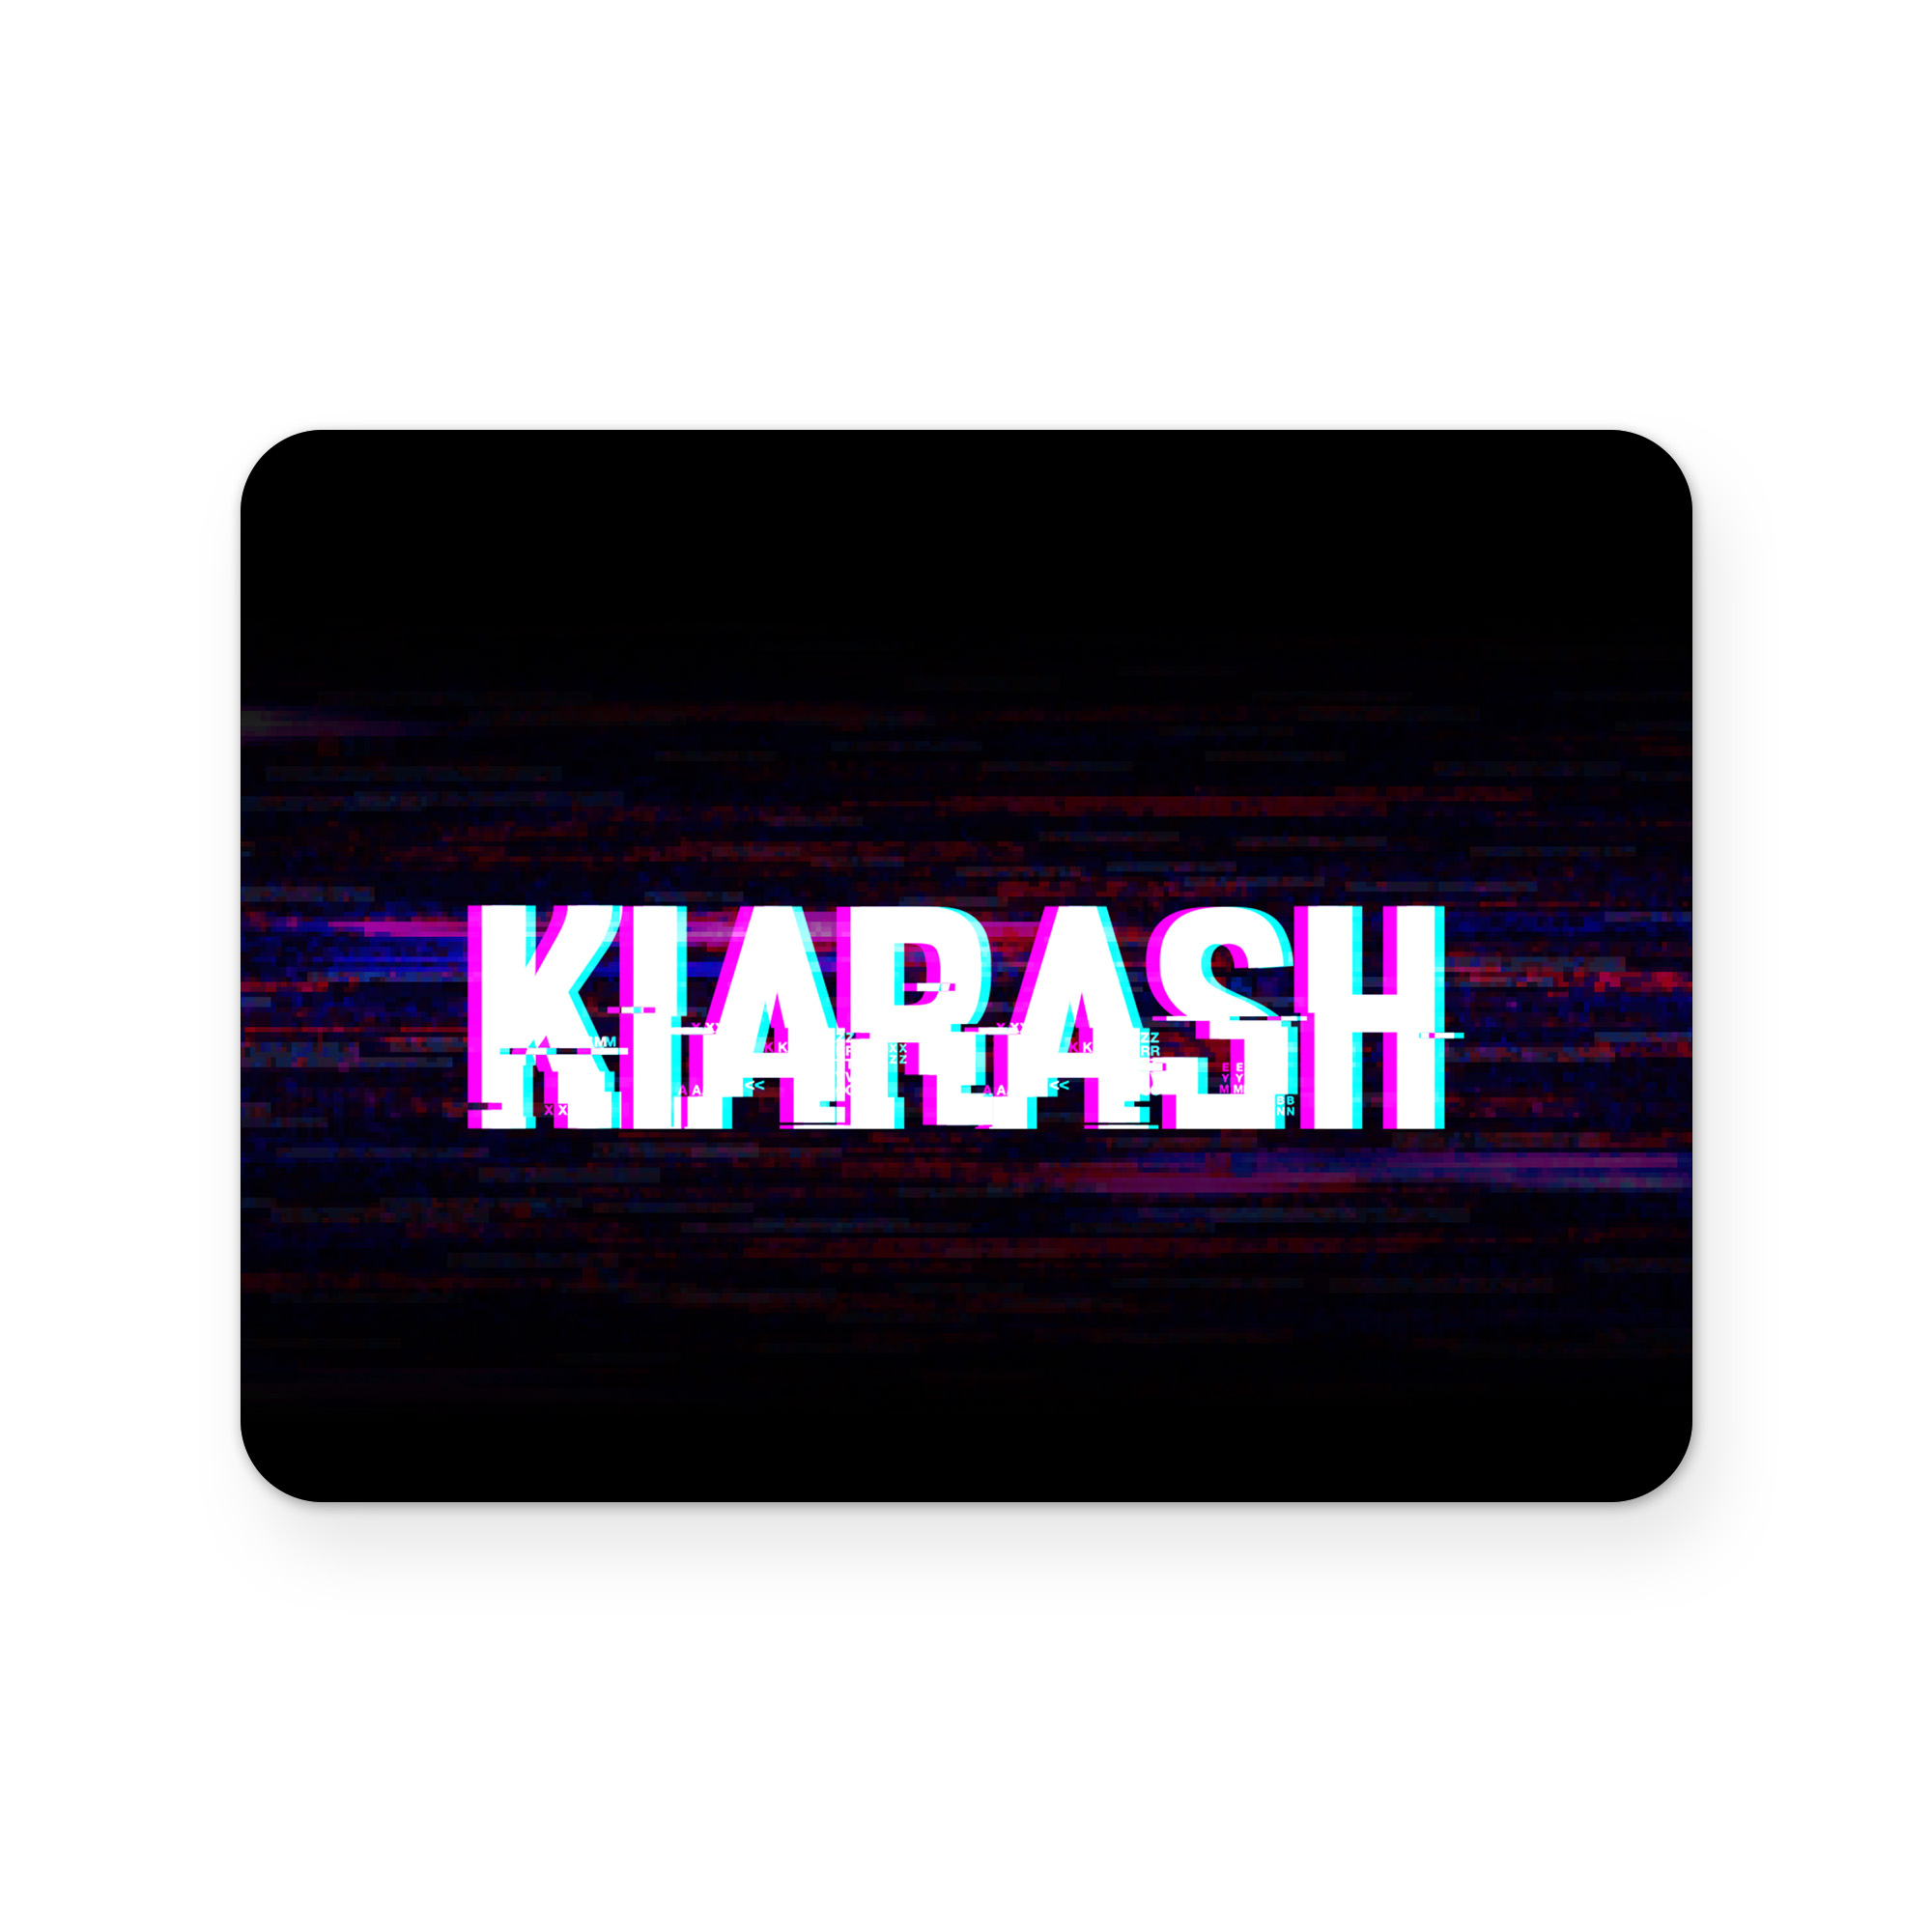 برچسب تاچ پد دسته پلی استیشن 4 ونسونی طرح KIARASH